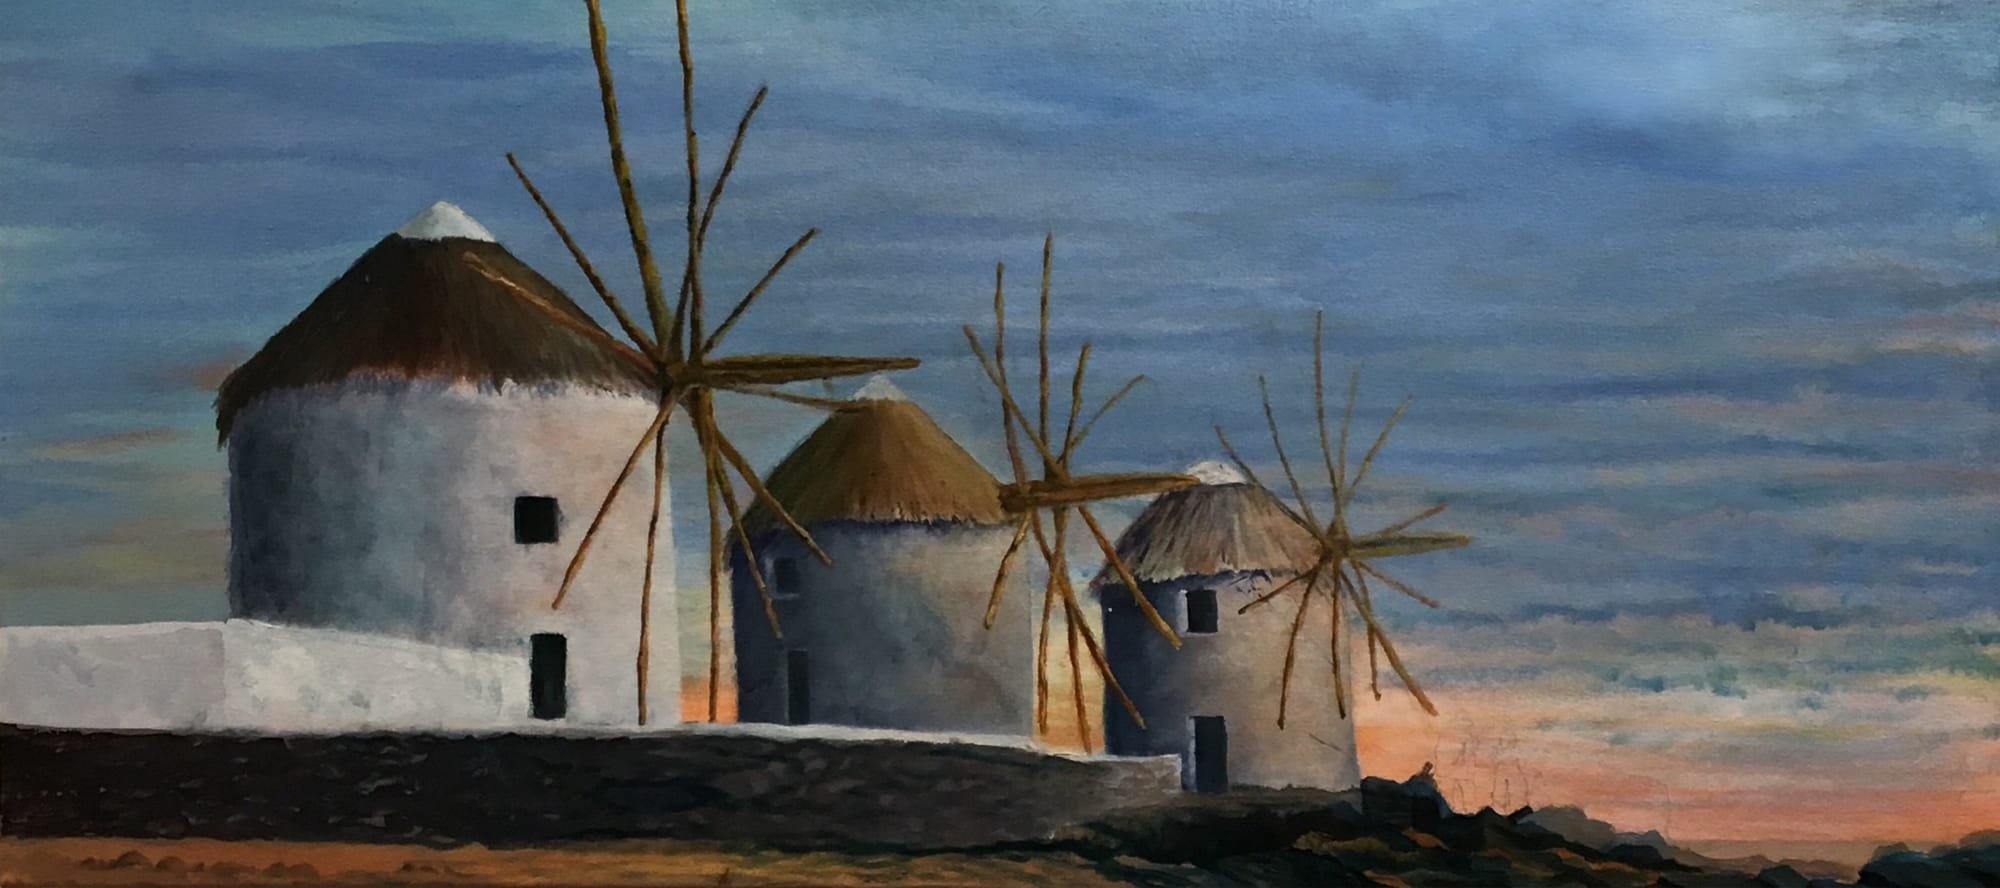 Mykonos island windmills